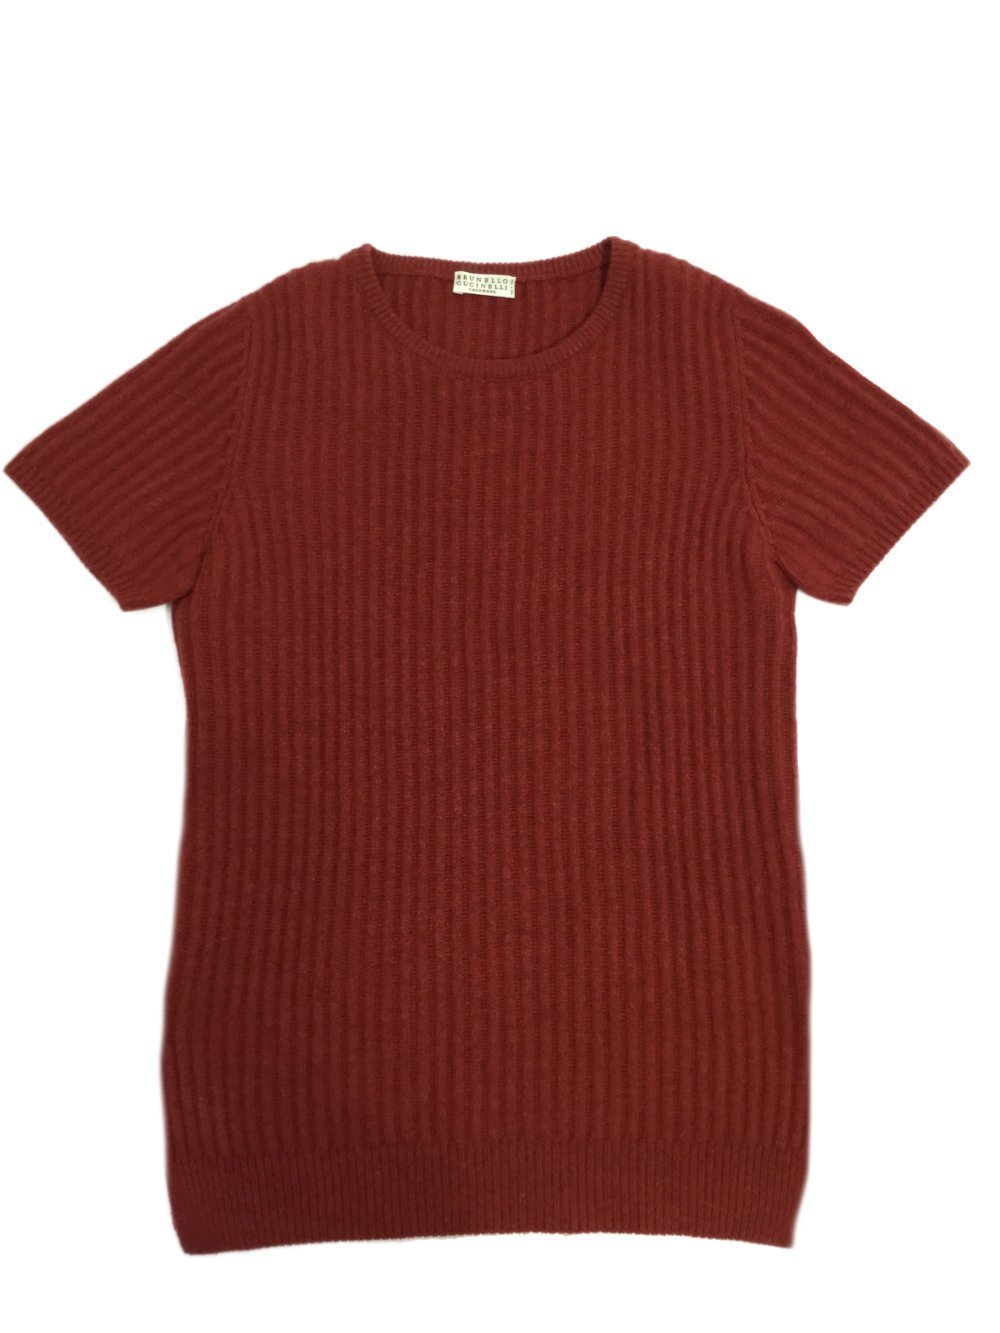 Brunello Cucinelli Cashmere Rib Short Sleeve Sweater-designer resale